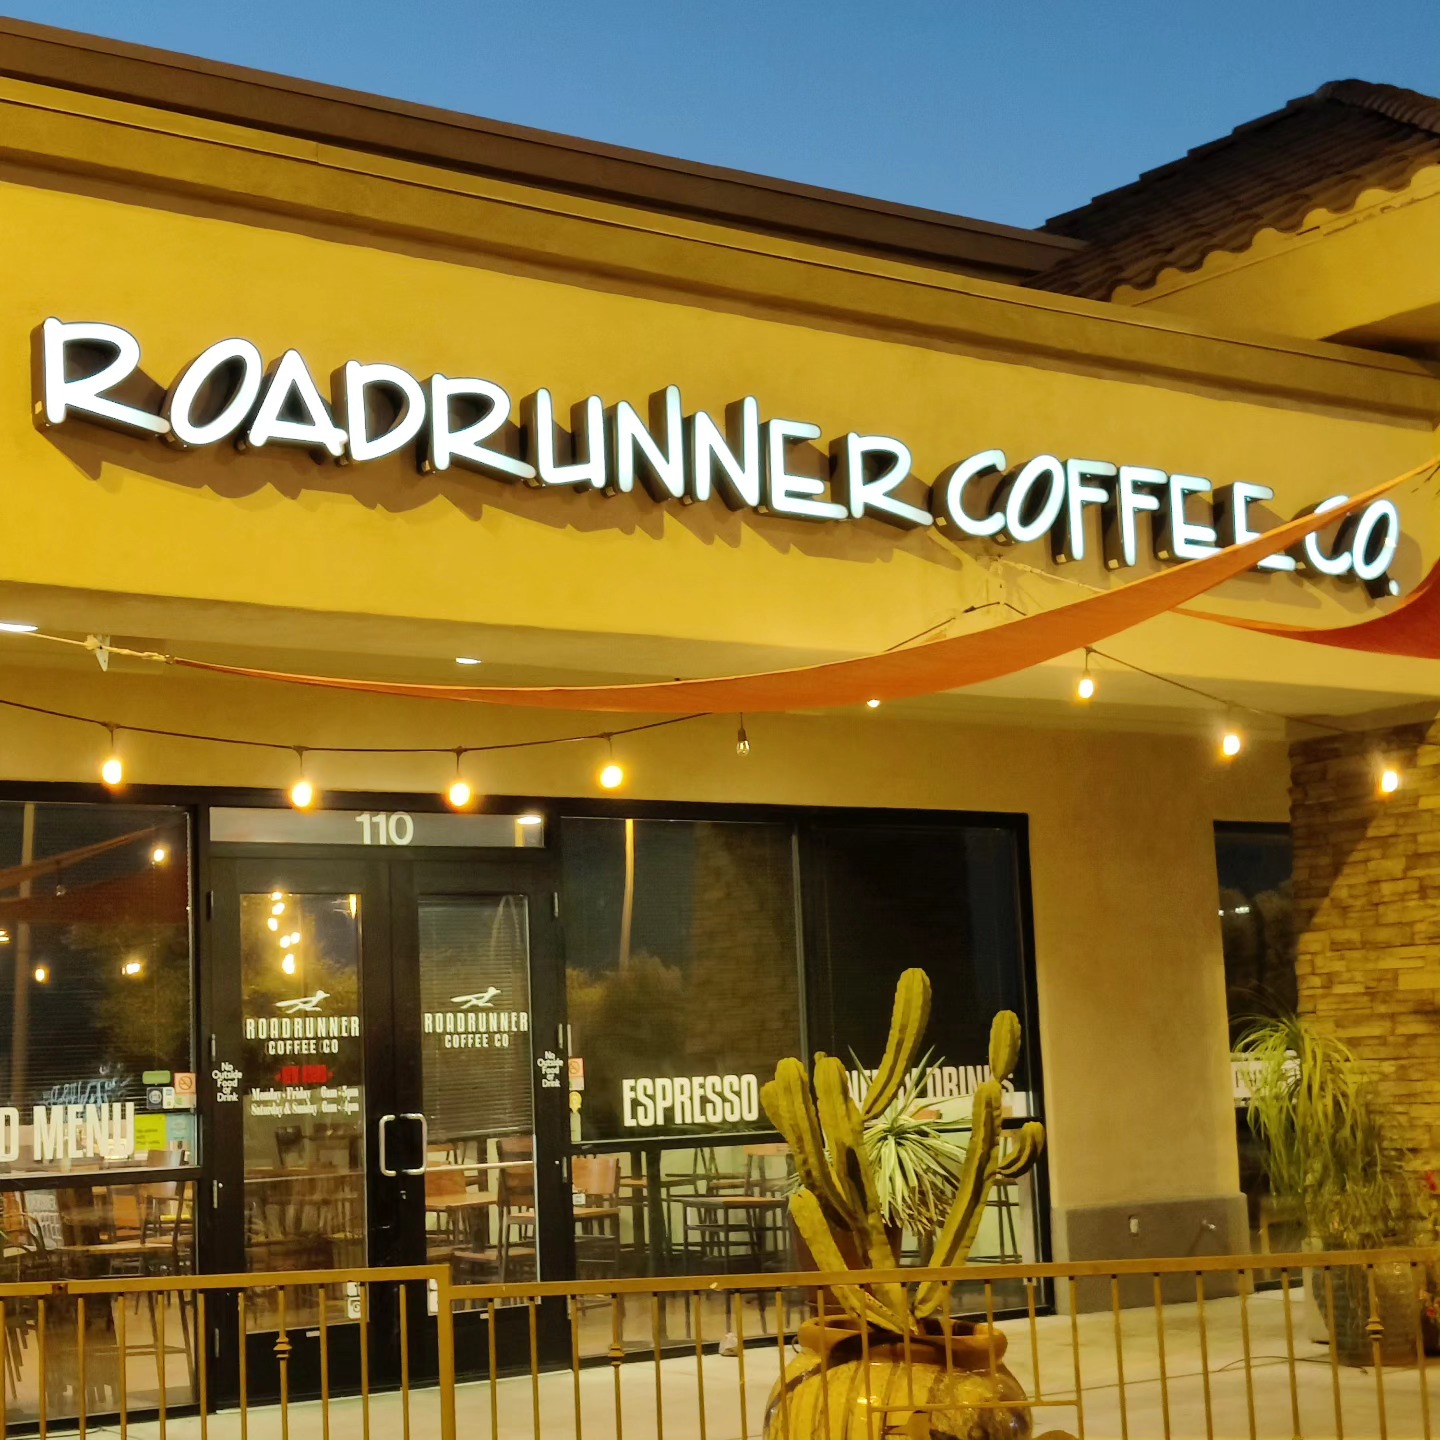 Roadrunner Coffee Co.